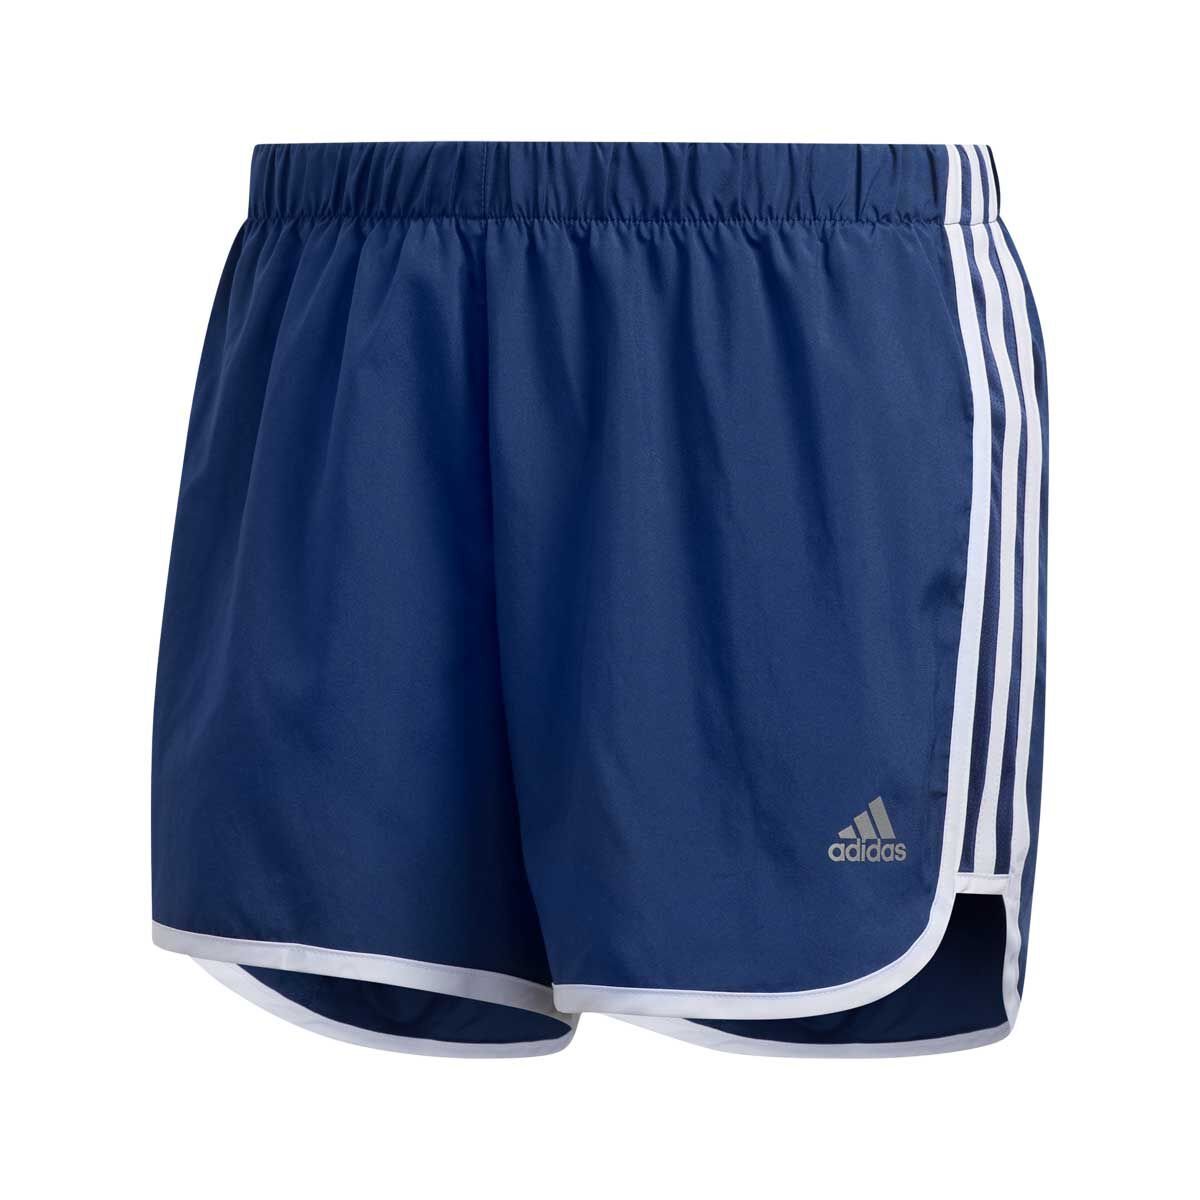 adidas navy blue shorts